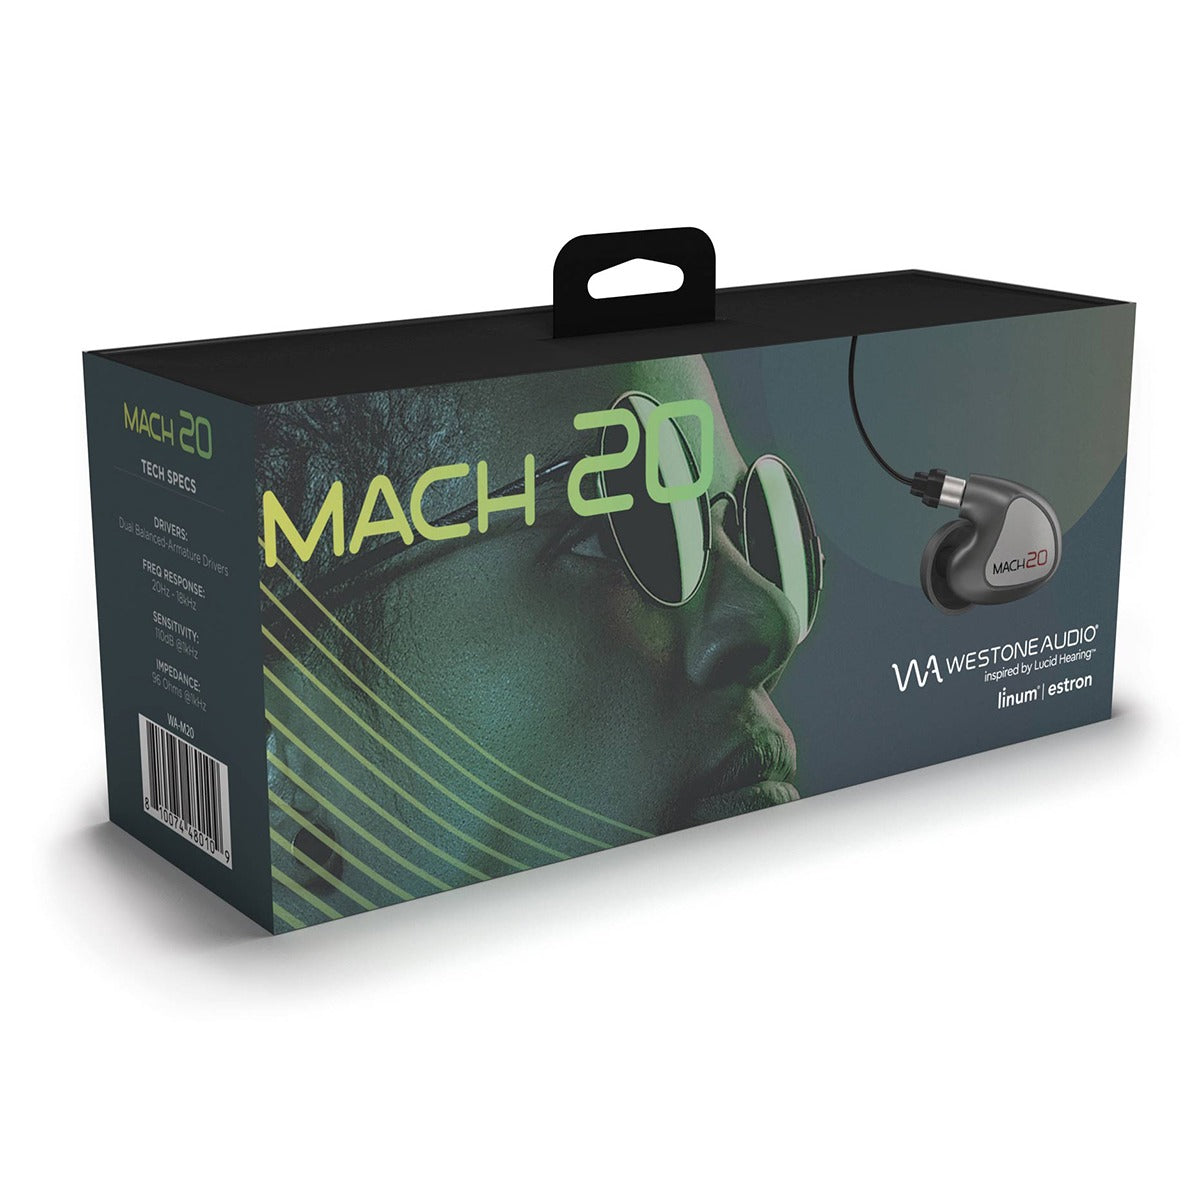 Westone MACH 20 - 2-driver Universal In-ear Monitors box